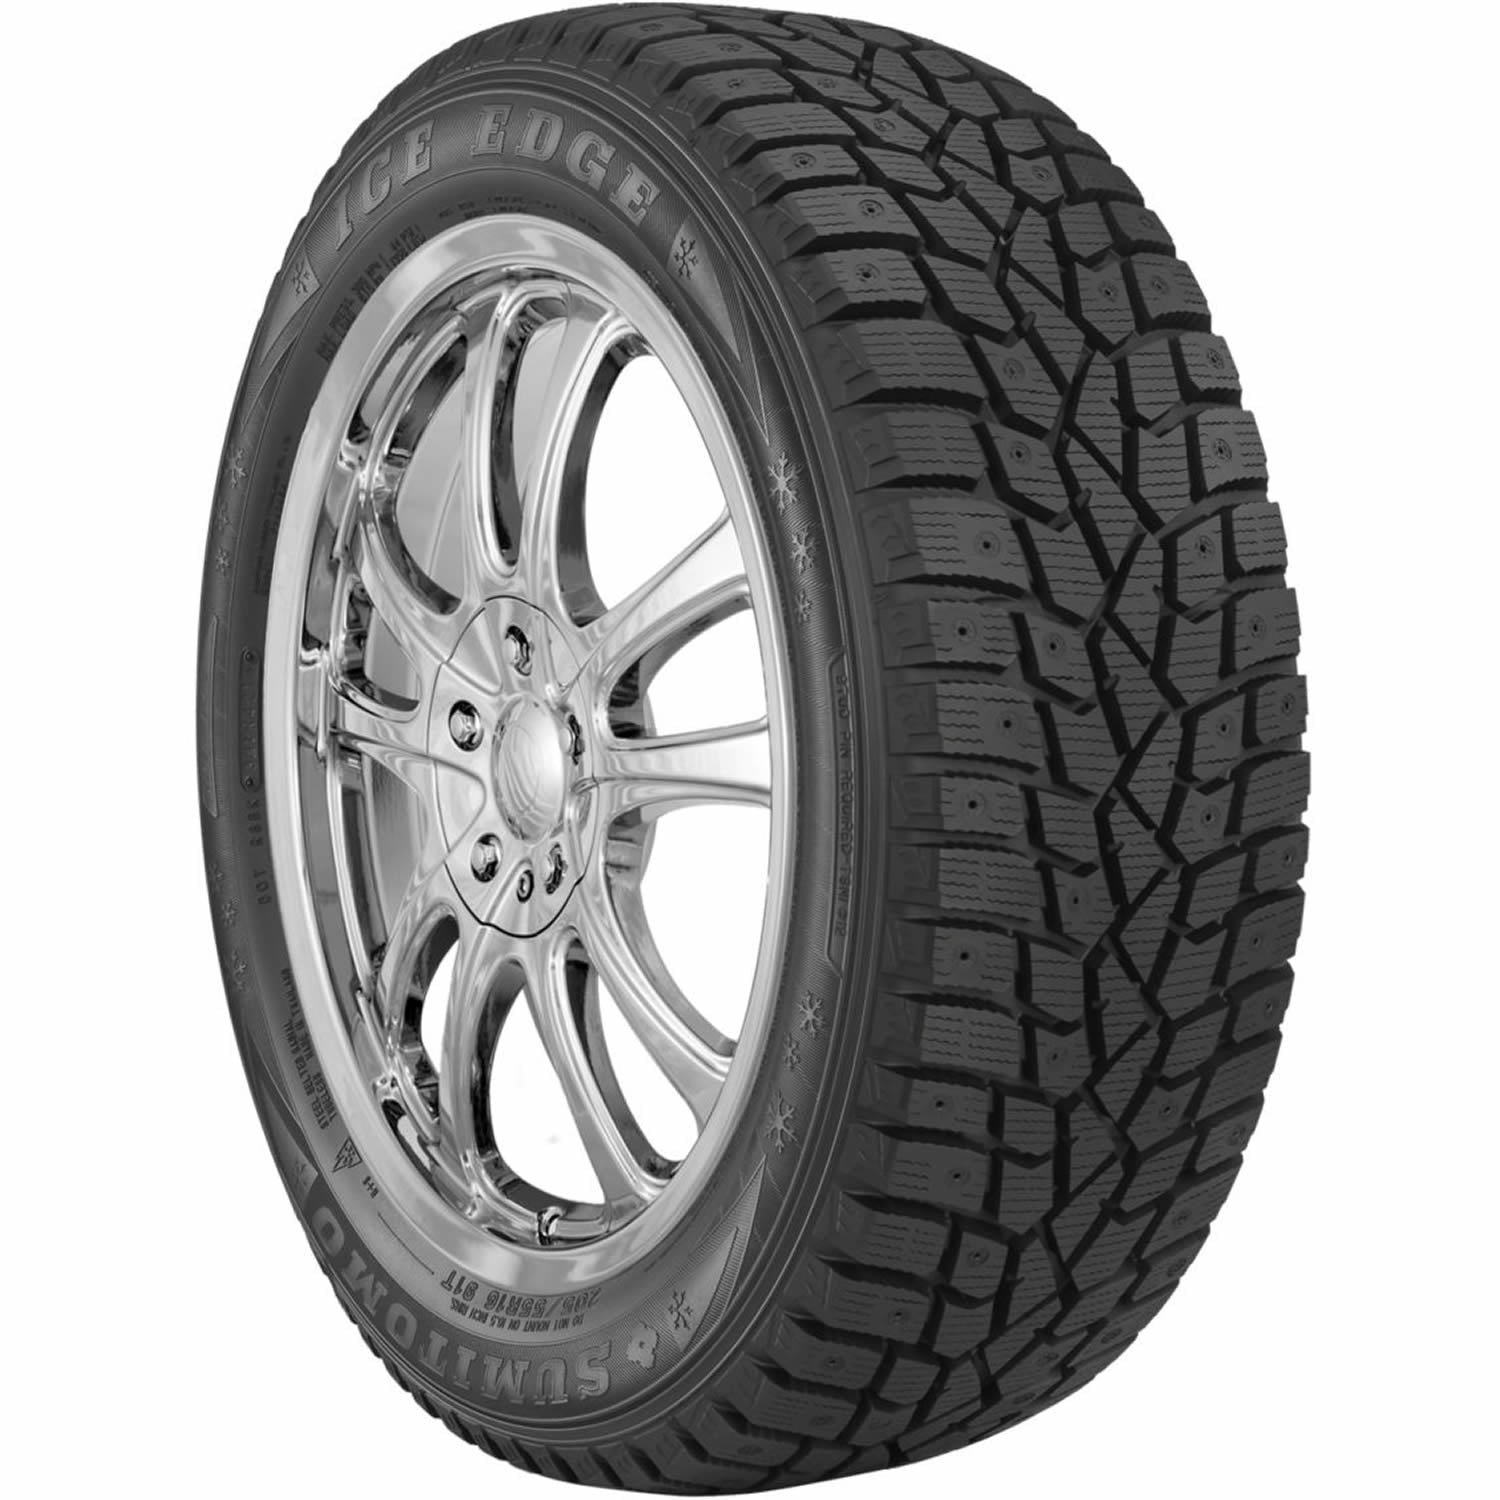 SUMITOMO ICE EDGE 195/60R15 (24.3X7.8R 15) Tires